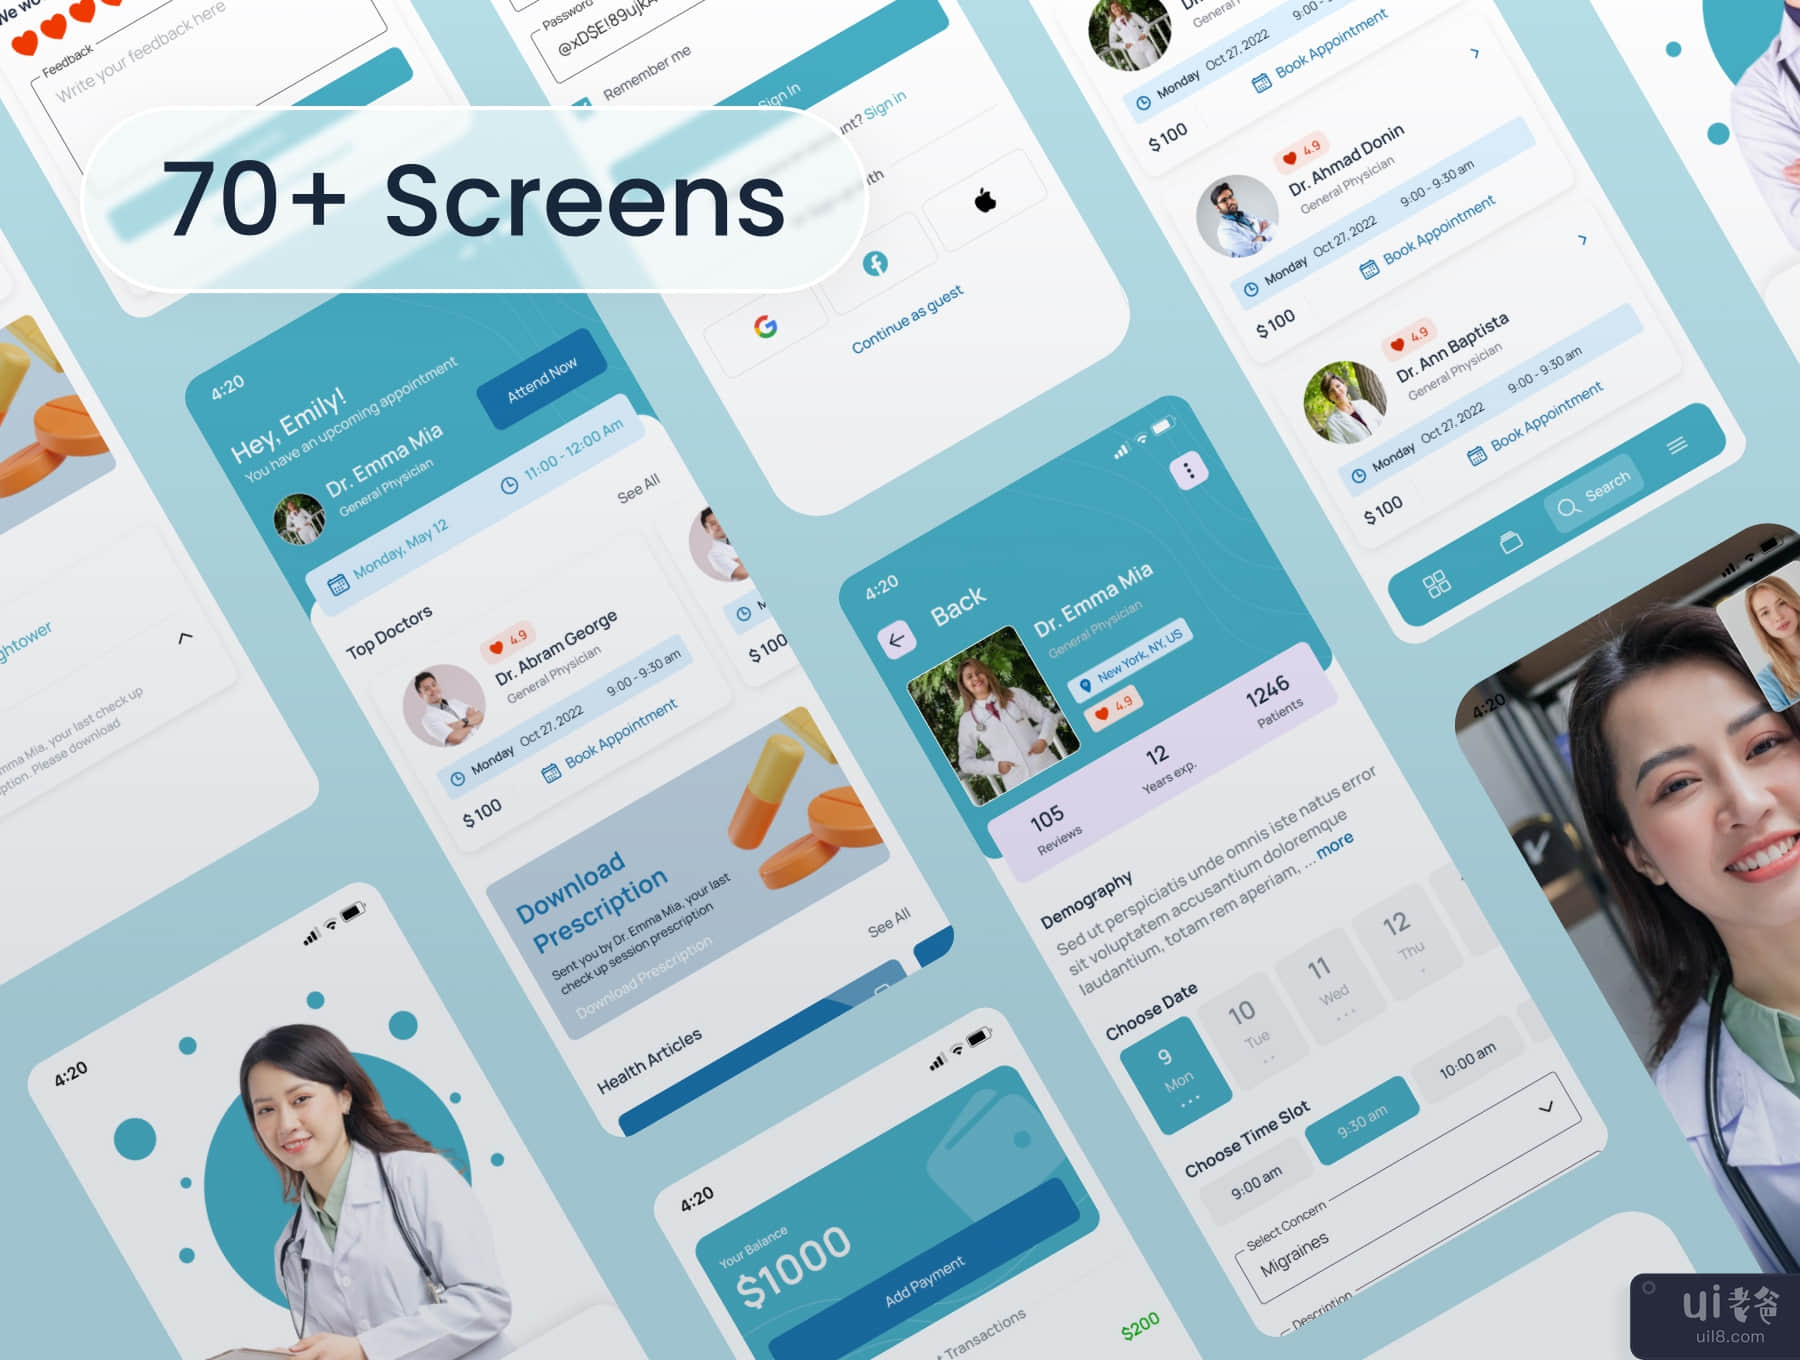 Medicina - 在线医生预约应用程序 UI 工具包 (Medicina - Online Doctor Appointment App UI Kit)插图1